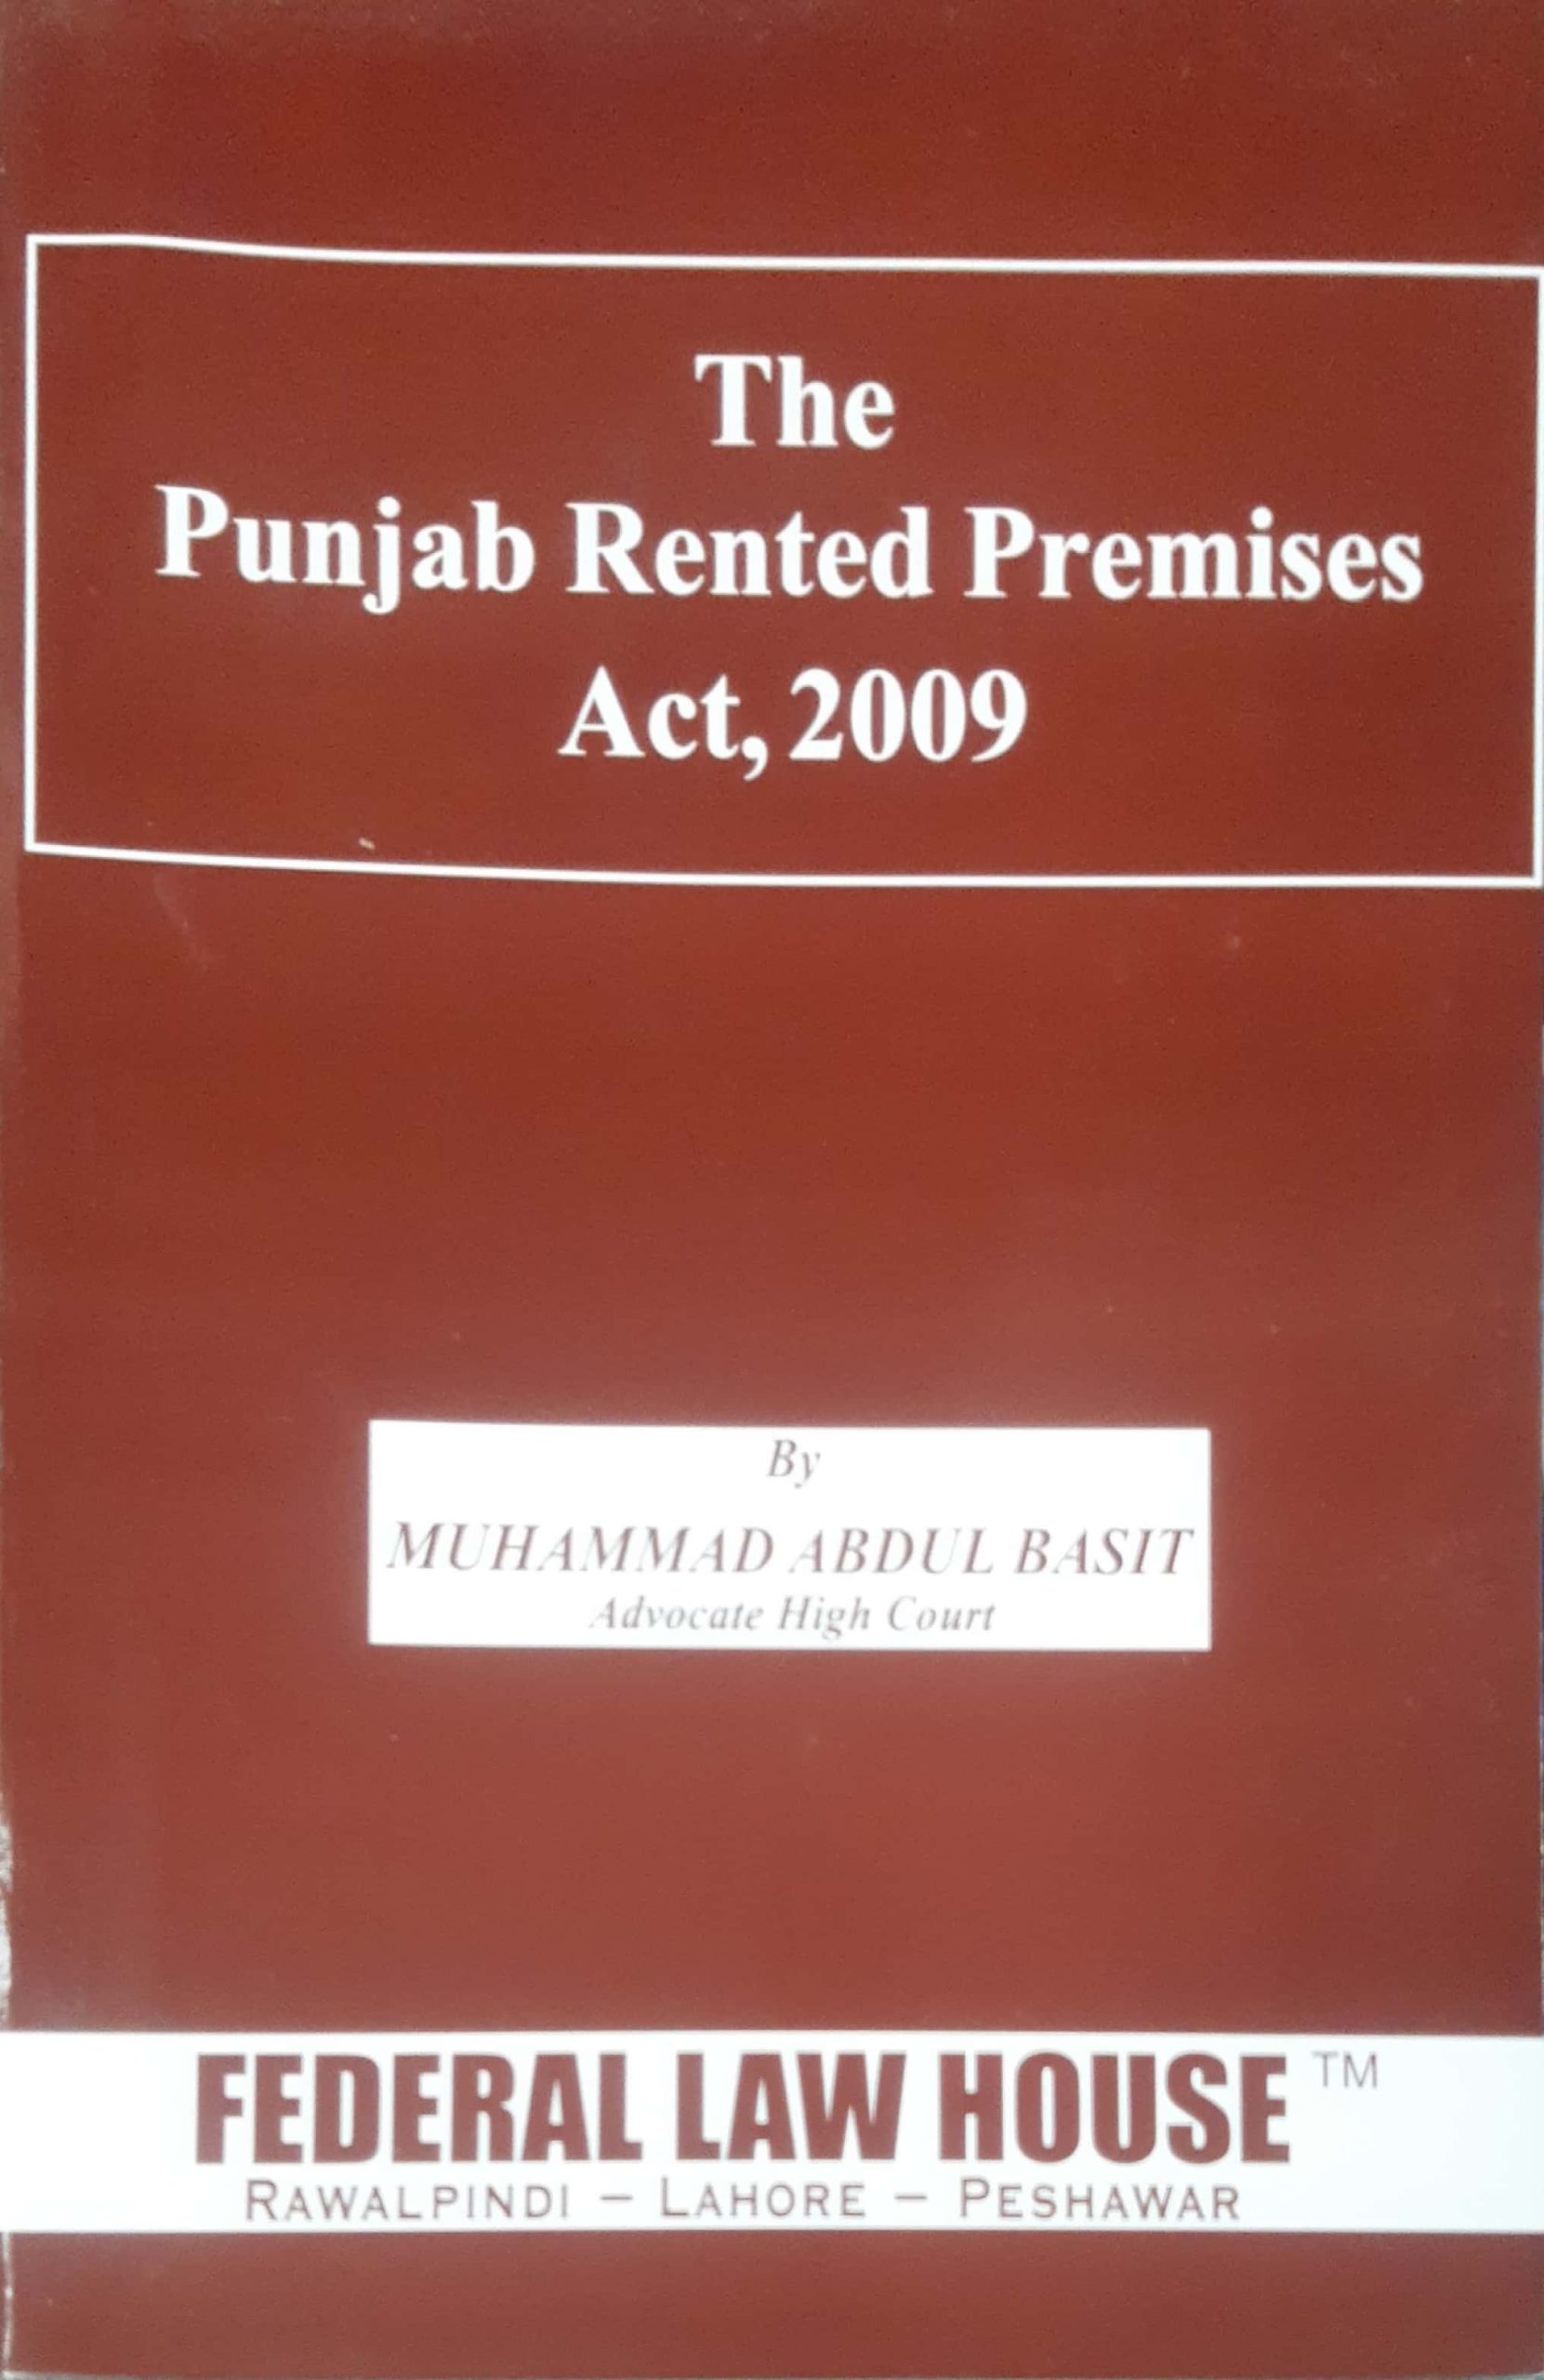 The Punjab Rented Premises Act, 2009